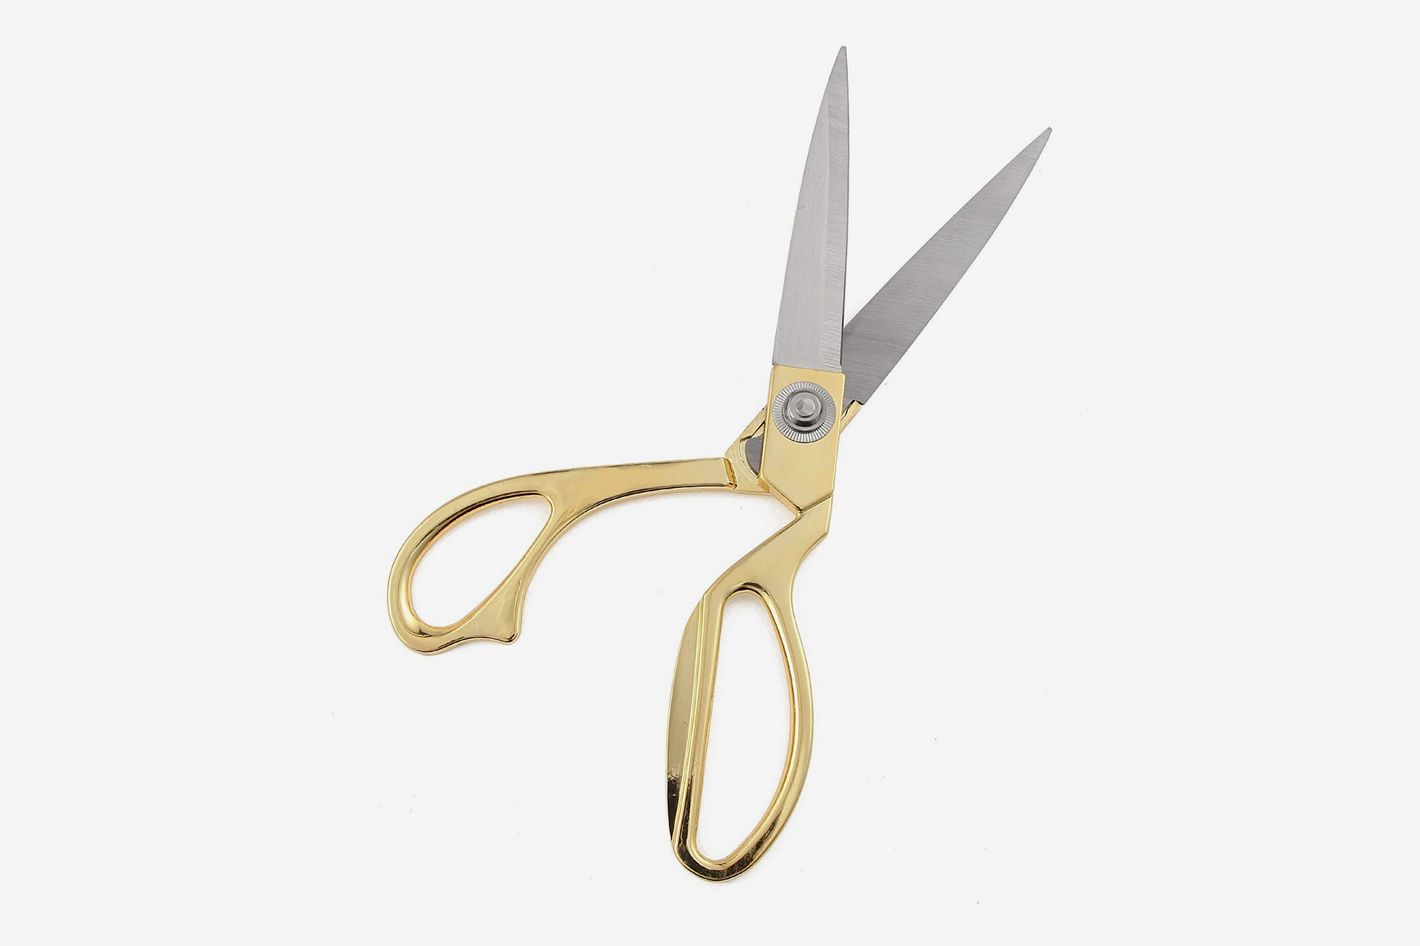 Kitchen Scissors: A Chef's Favorite Tool